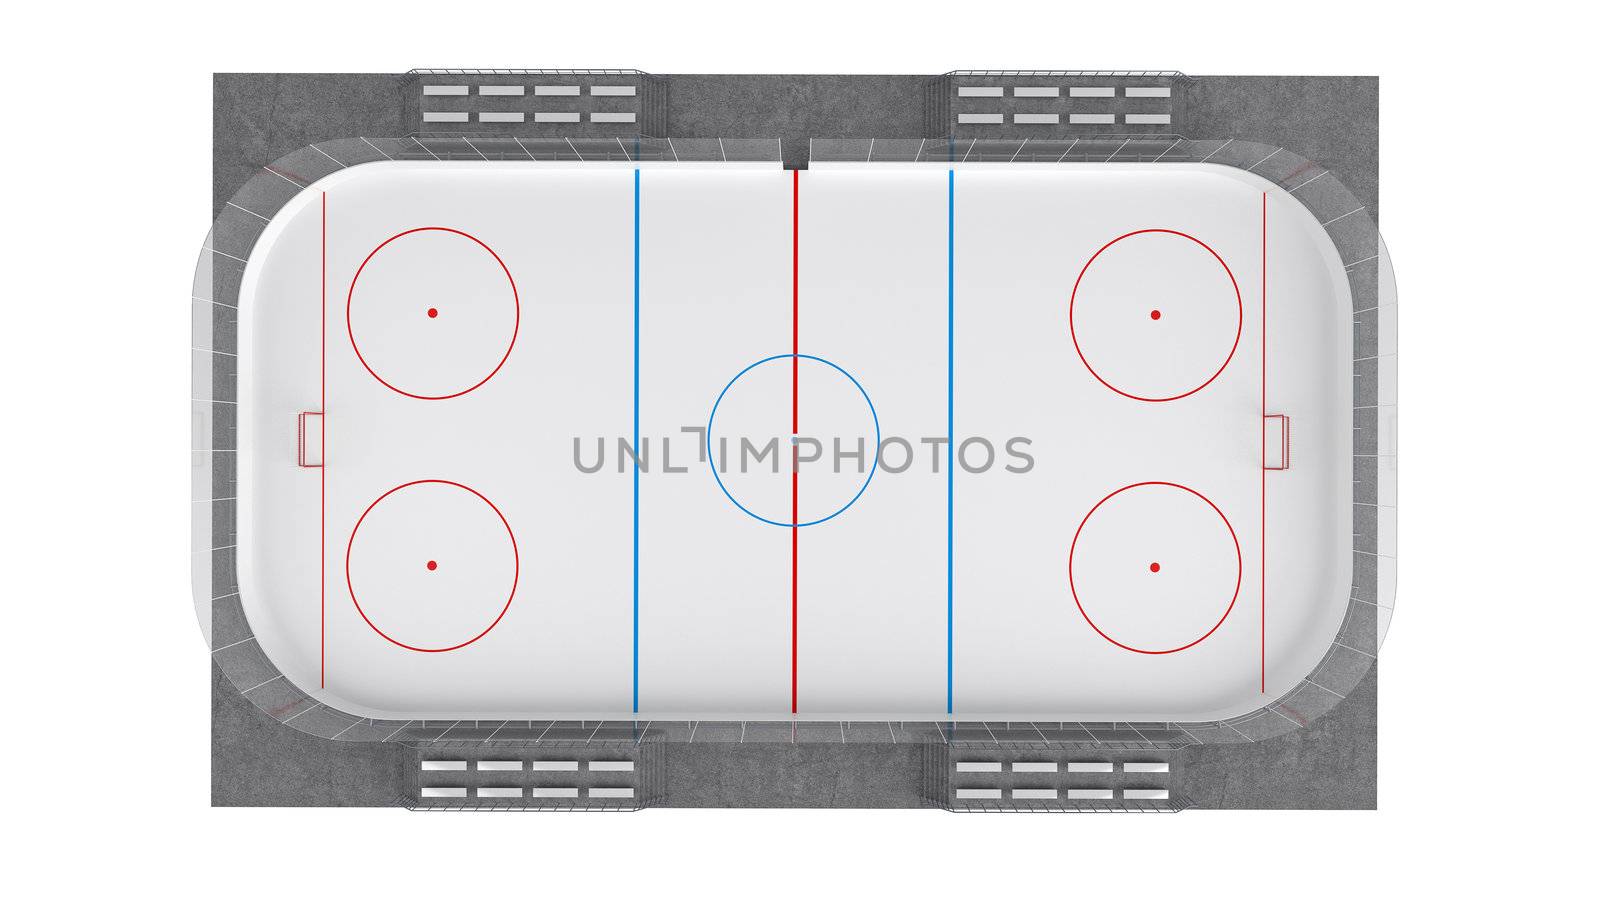 Hockey field isolated on white background